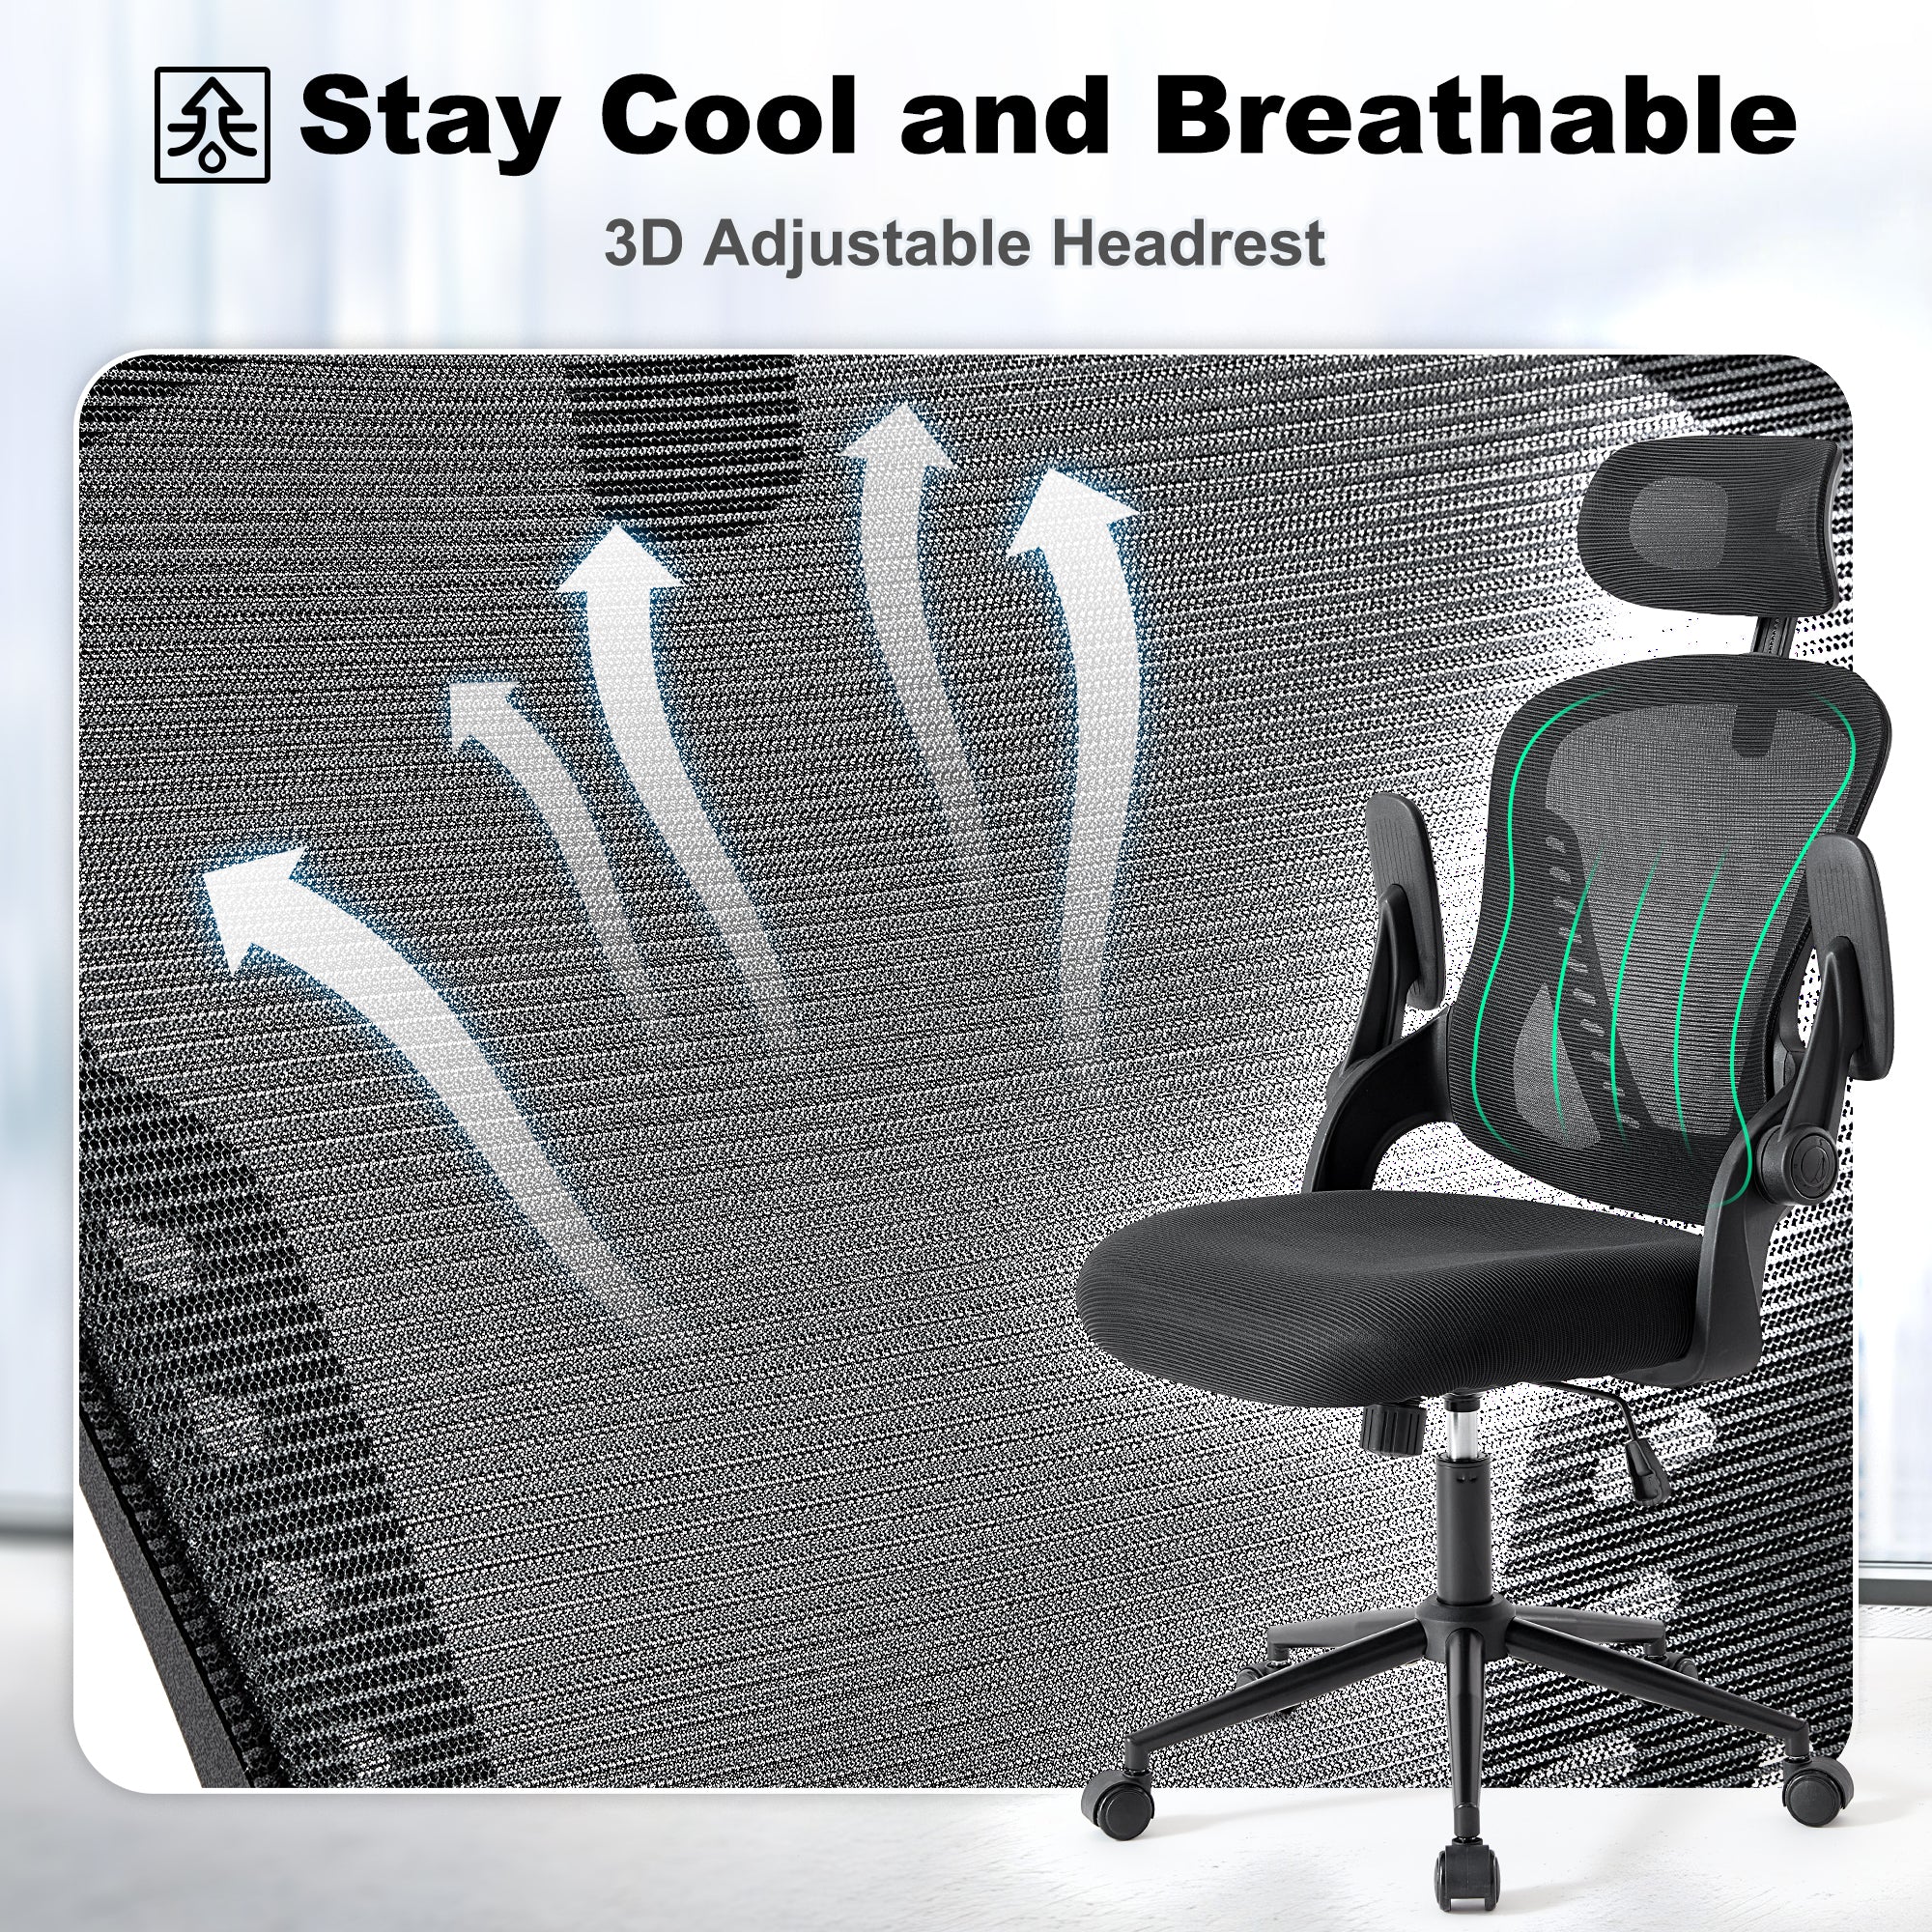 Ovios Office Chair, Ergonomic High Back,Adjustable Armrests